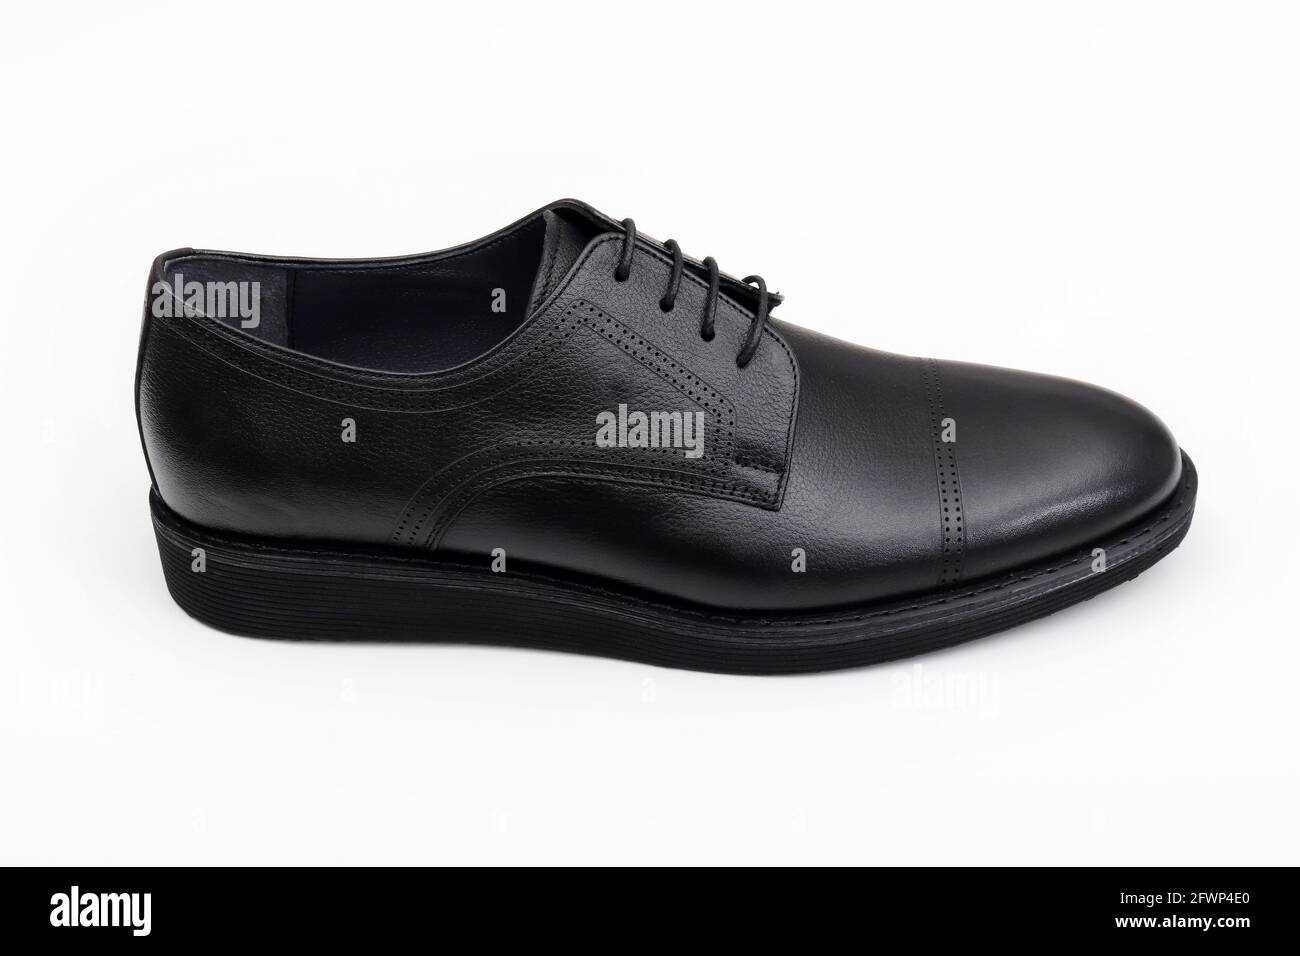 Classic black leather men's shoes Stock Photo - Alamy